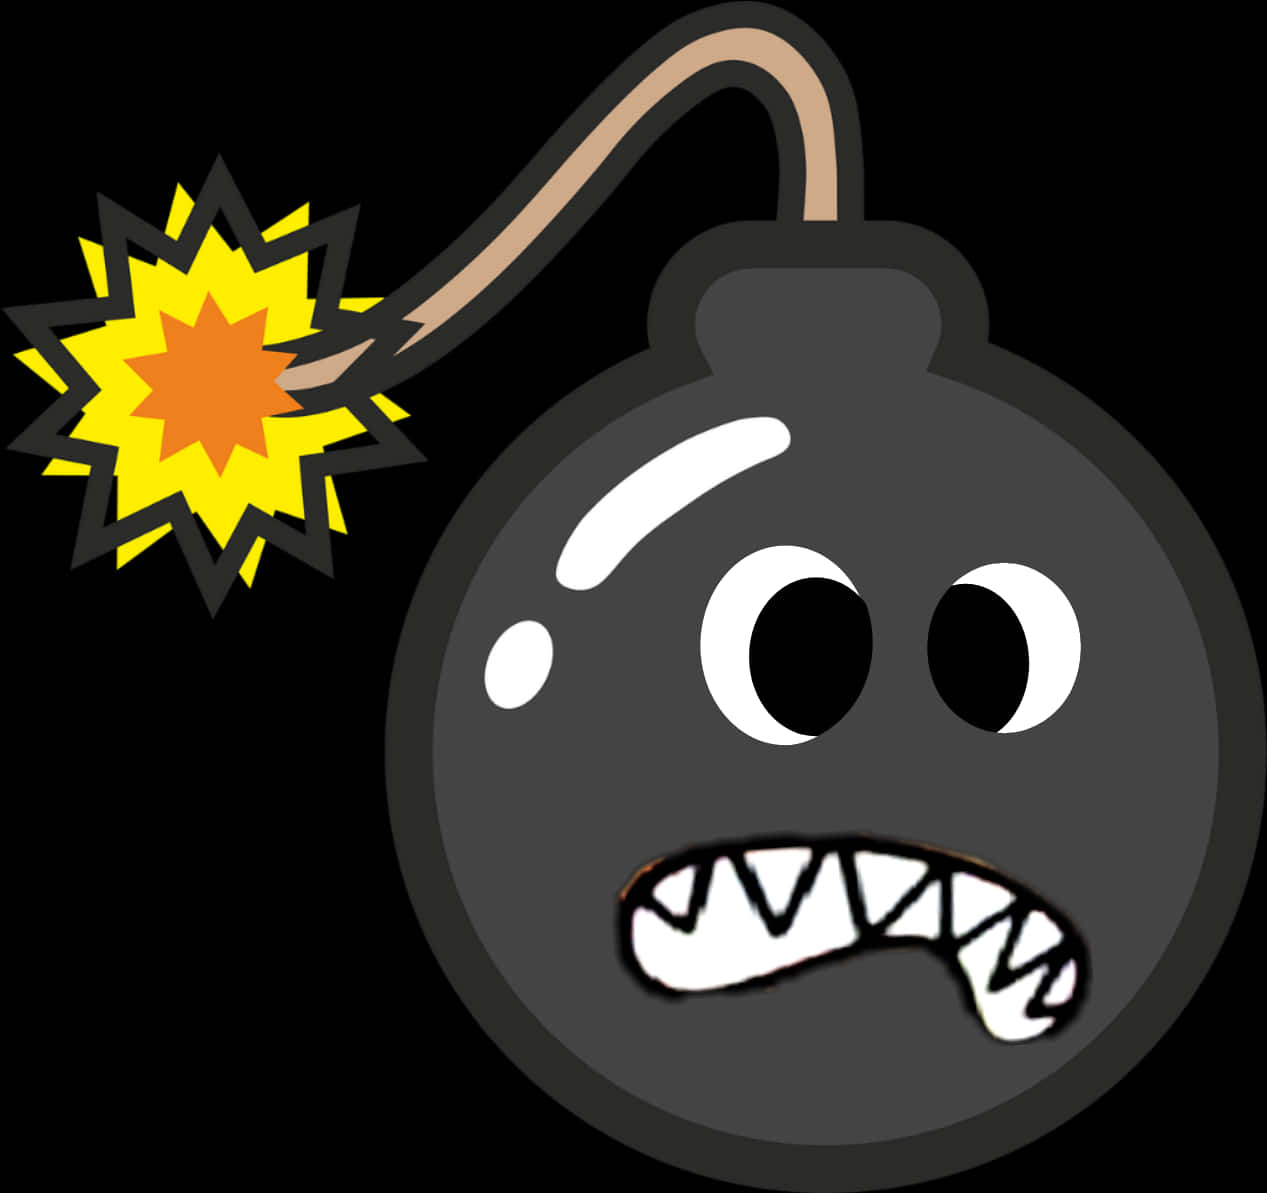 Bomb Emoji - Transparent Background Bomb Clipart, Hd Png Download